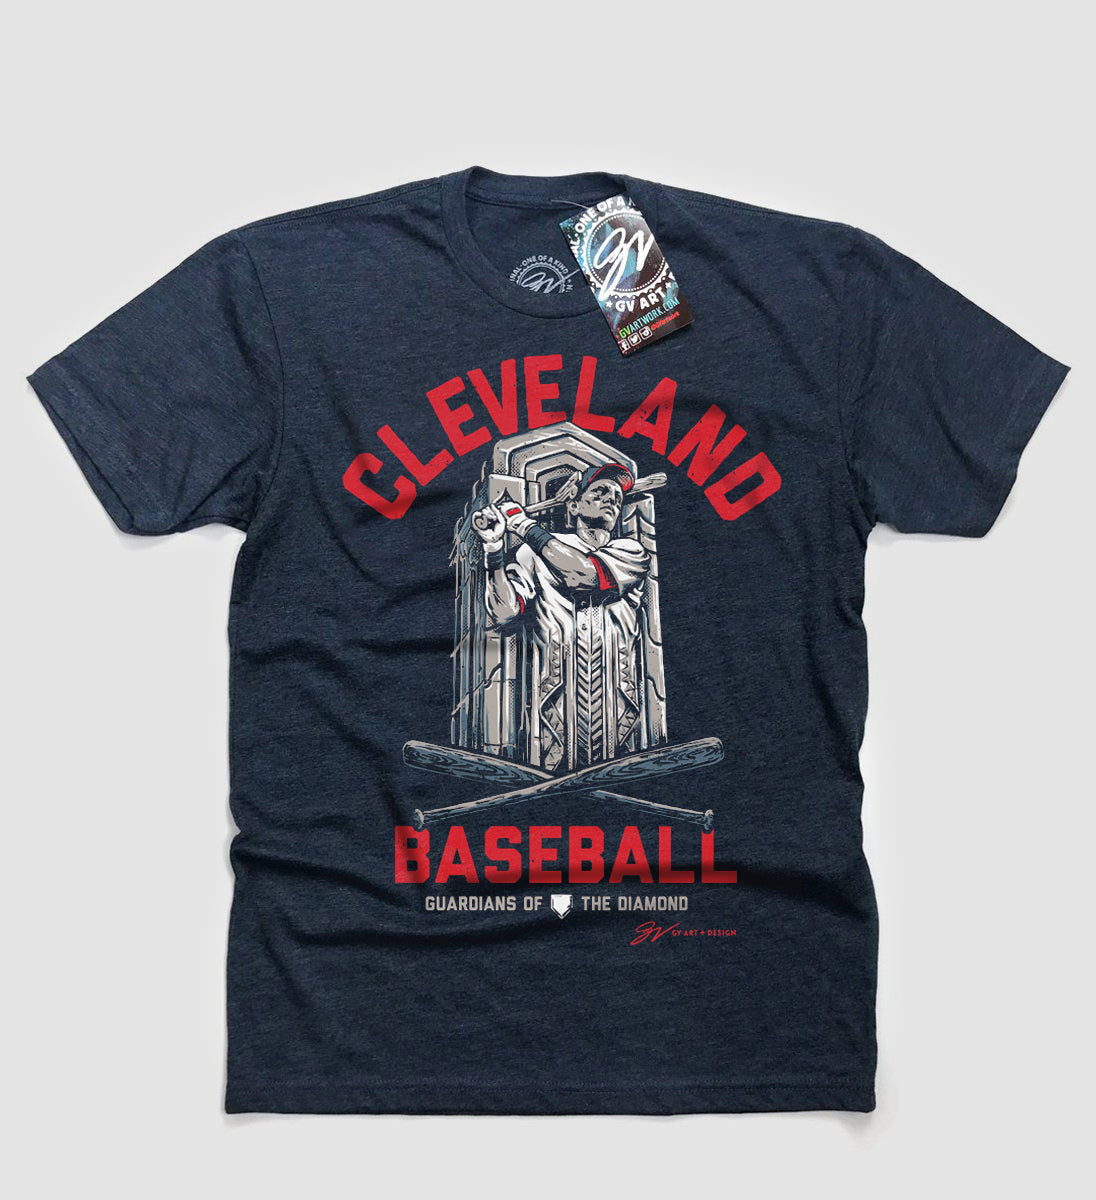 Cleveland Shirts for Men for sale